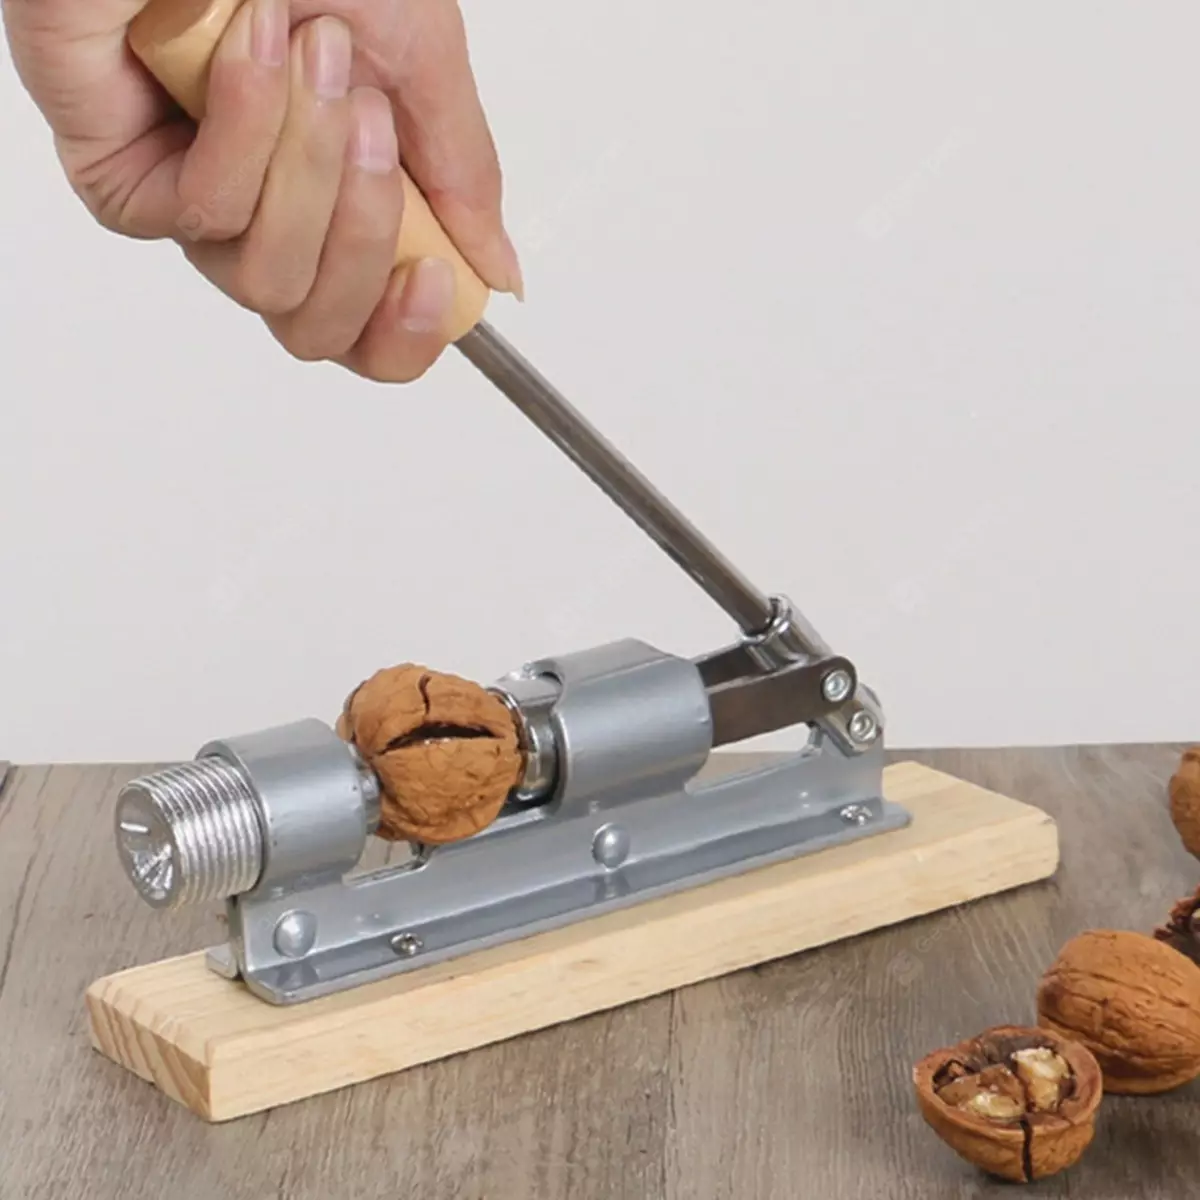 OFKHOKOL: Maka walnuts na cedar, maka hazelnuts. Find 